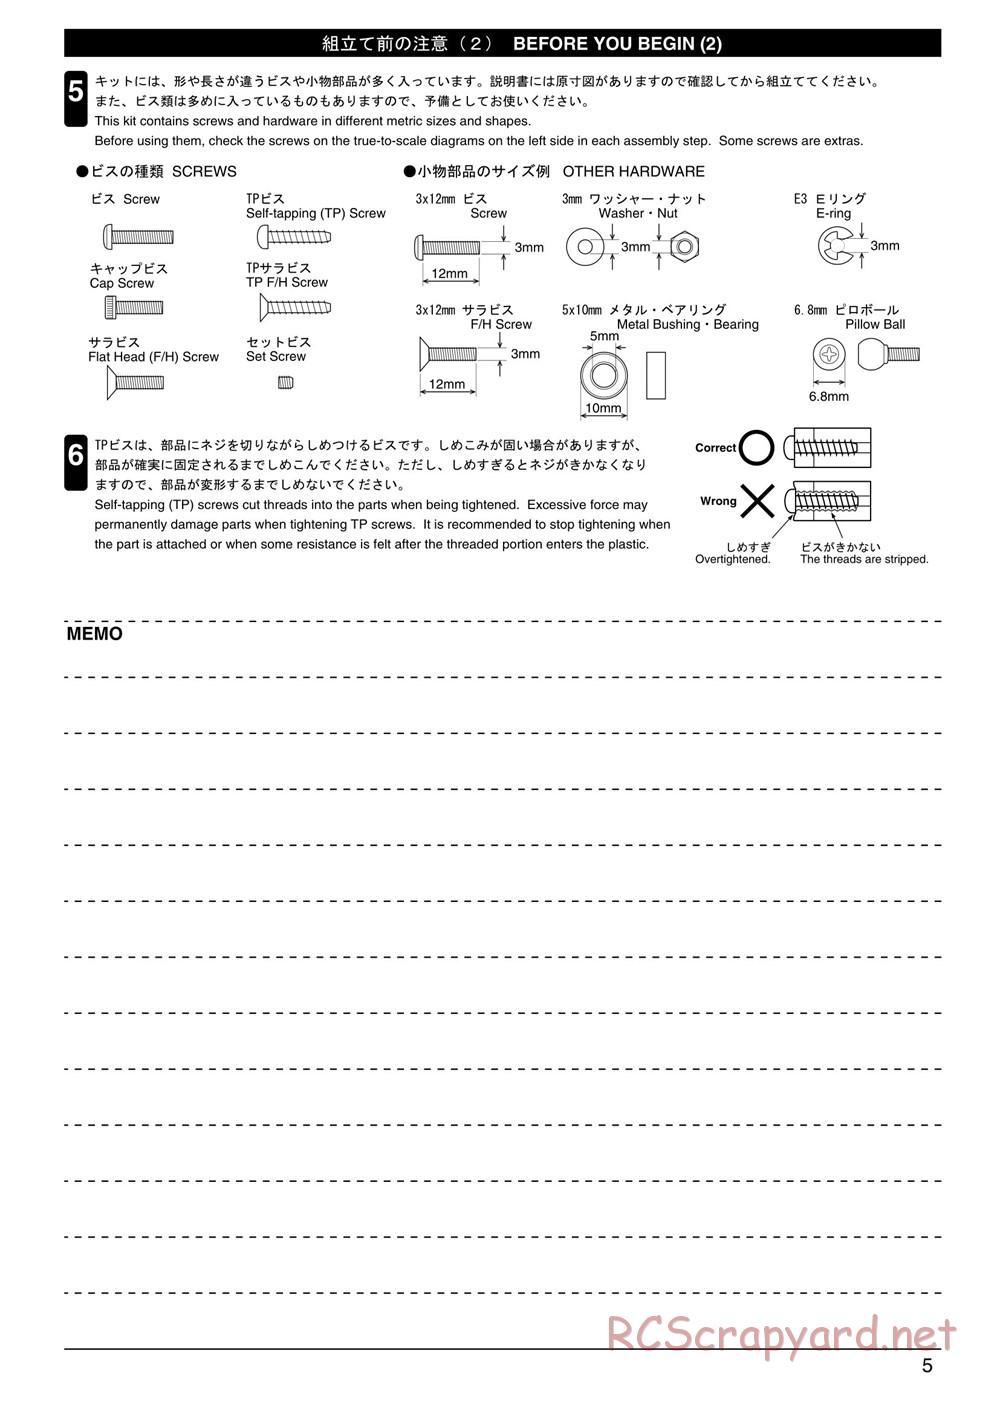 Kyosho - Super Eight GP20 Landmax 2 - Manual - Page 5